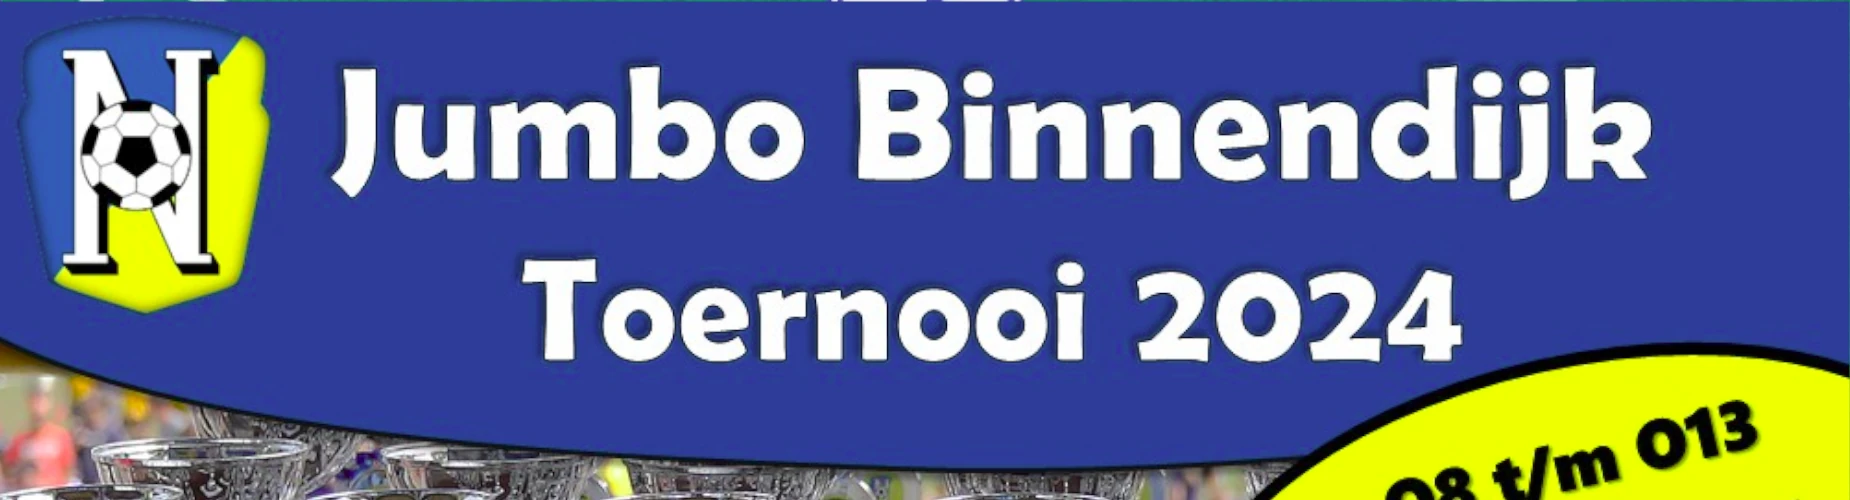 Banner - Jumbo Binnendijk Toernooi 2024 - vv Nunspeet - Nunspeet